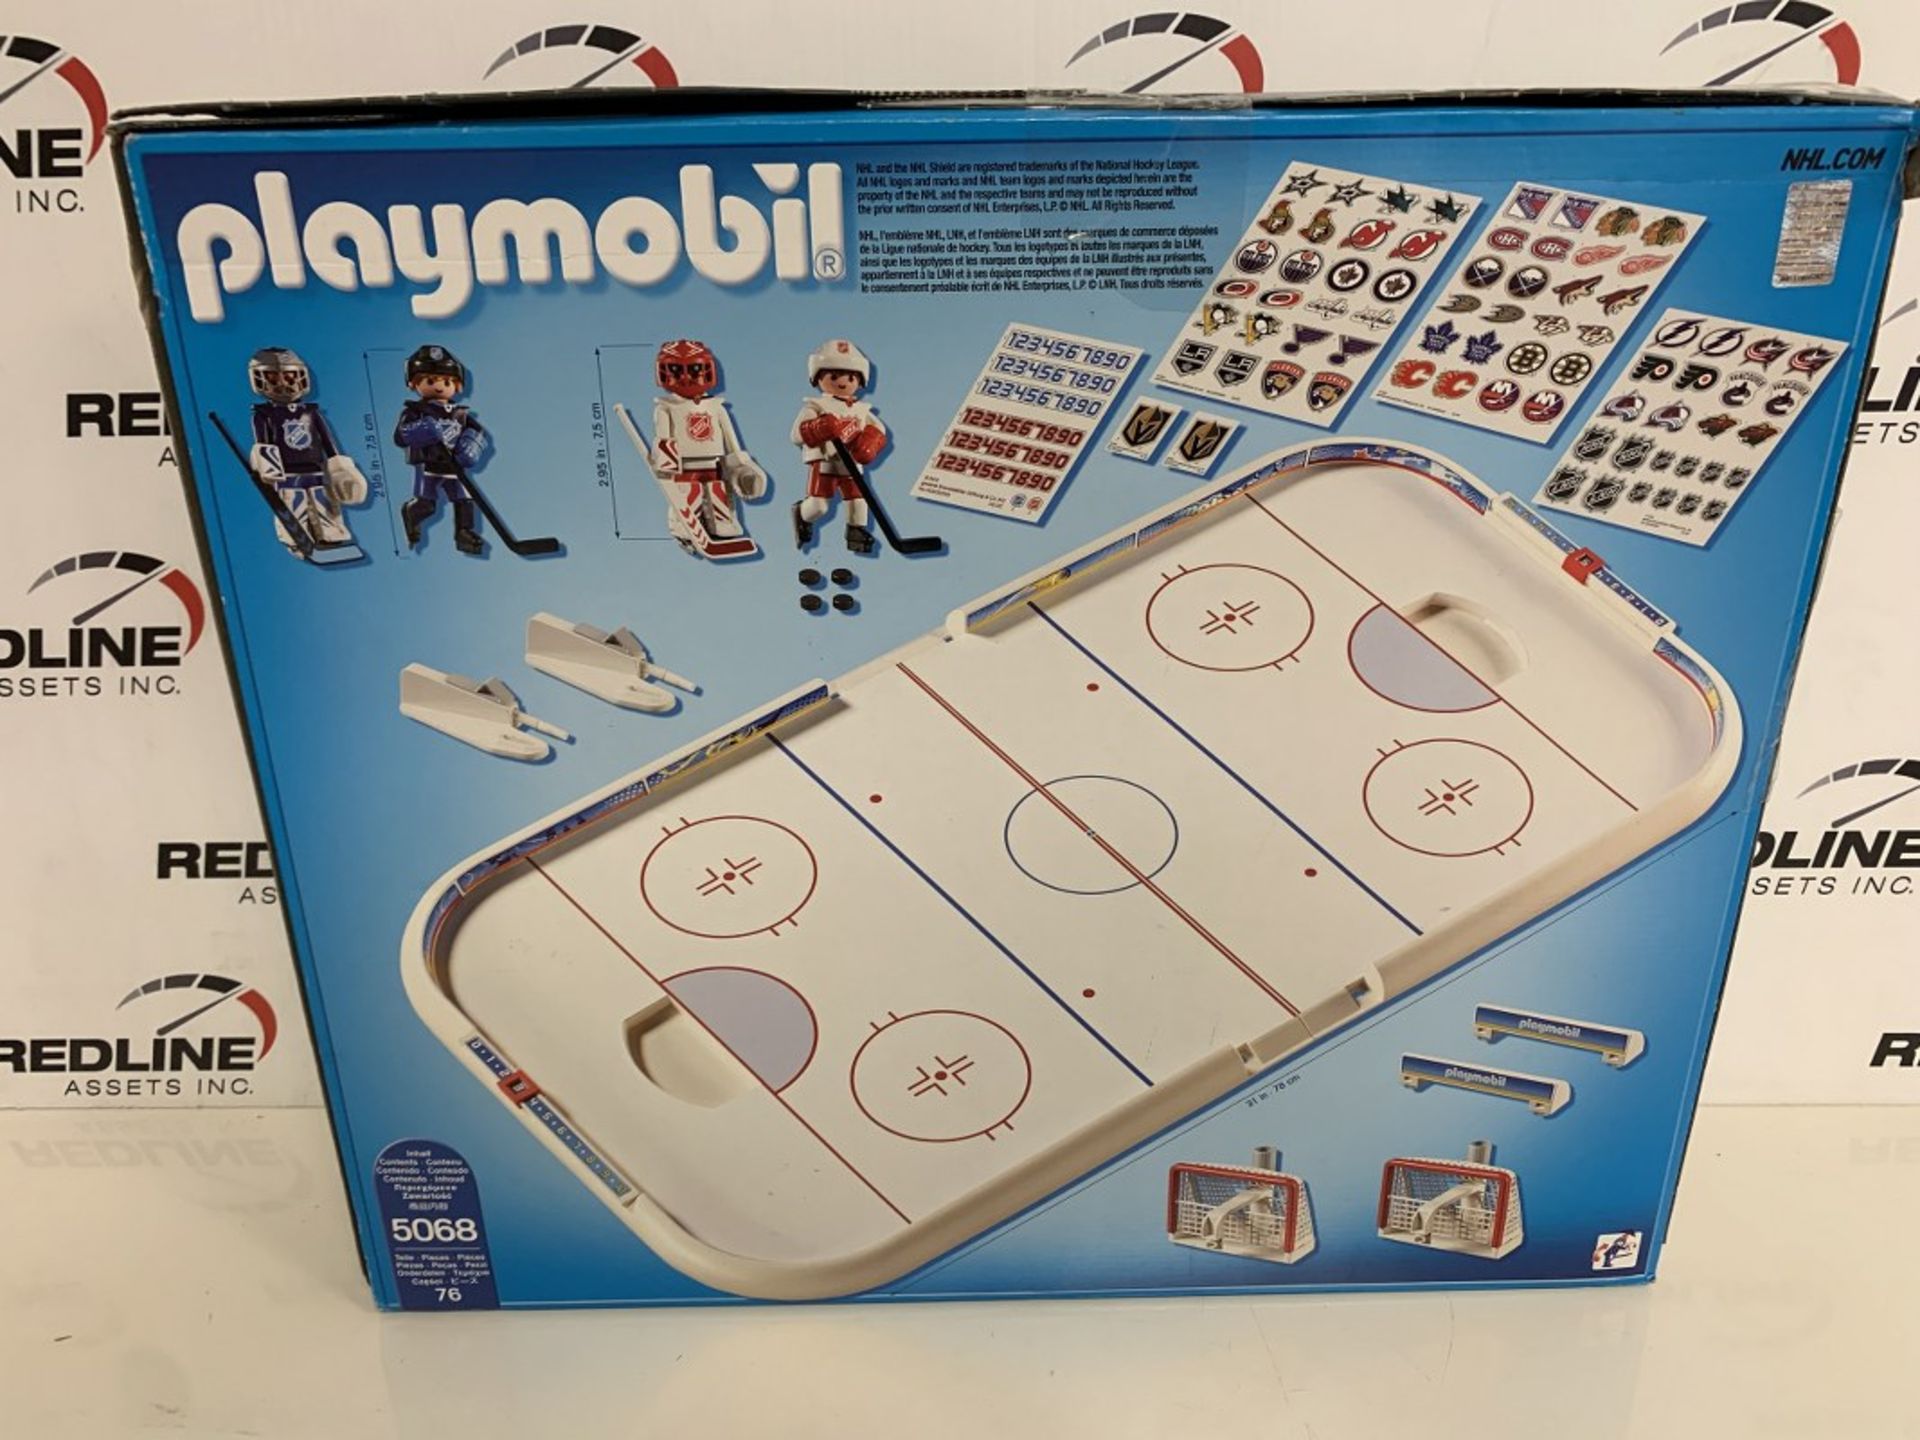 Nhl - Playmobile Table Top Hockey Set - Image 2 of 2